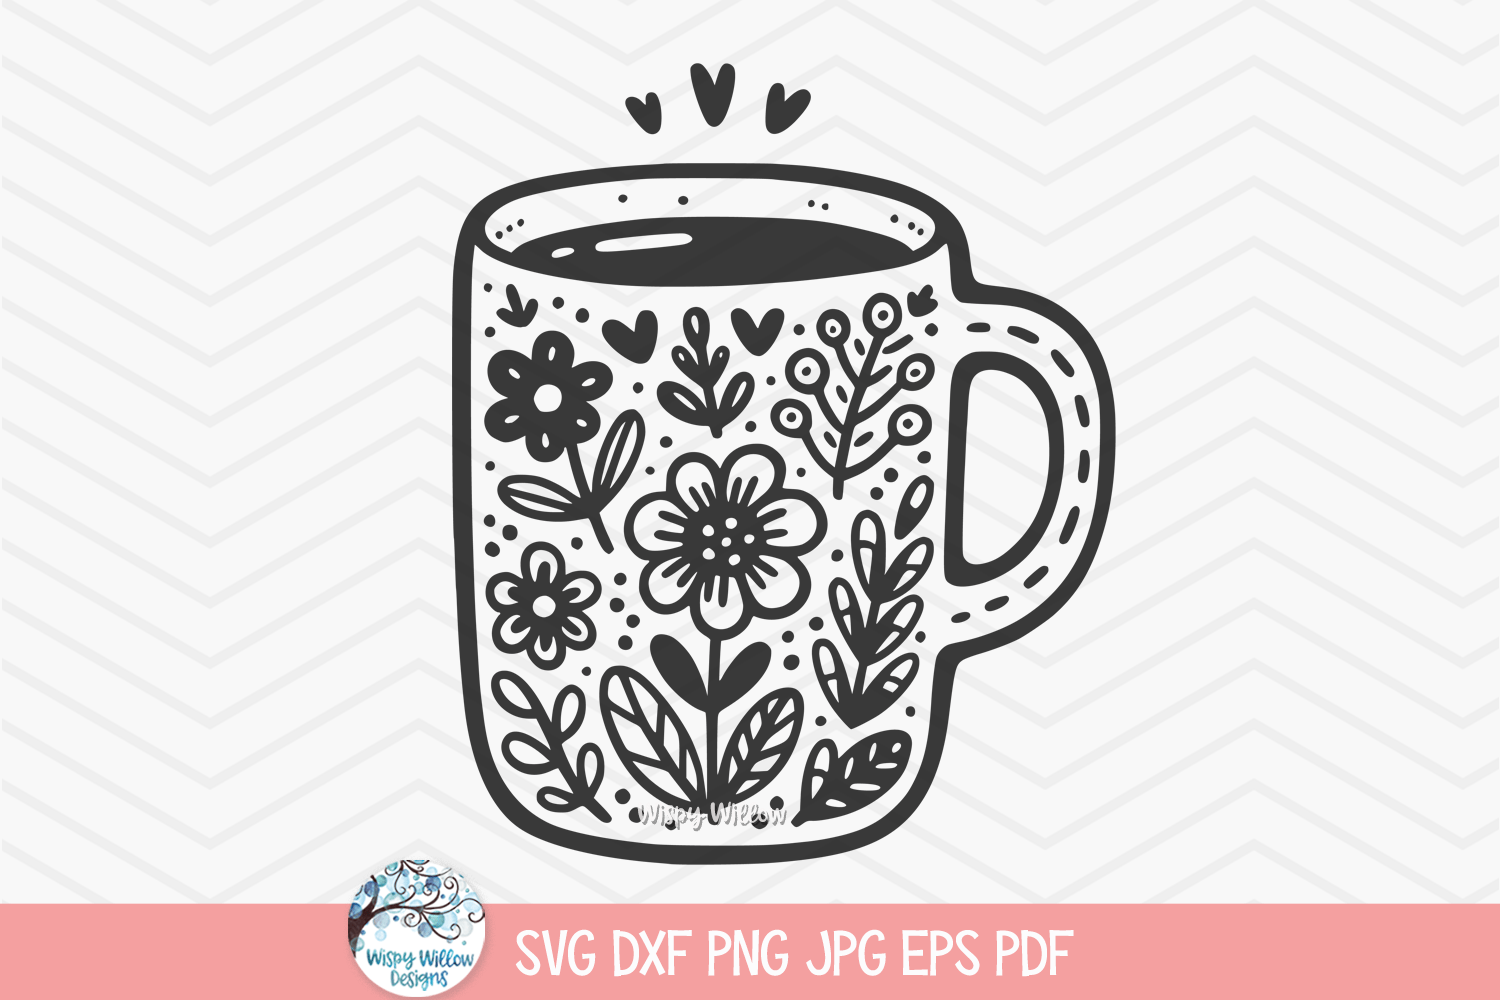 Flower Coffee Mug SVG | Whimsical Coffee Cup Illustration Wispy Willow Designs Company